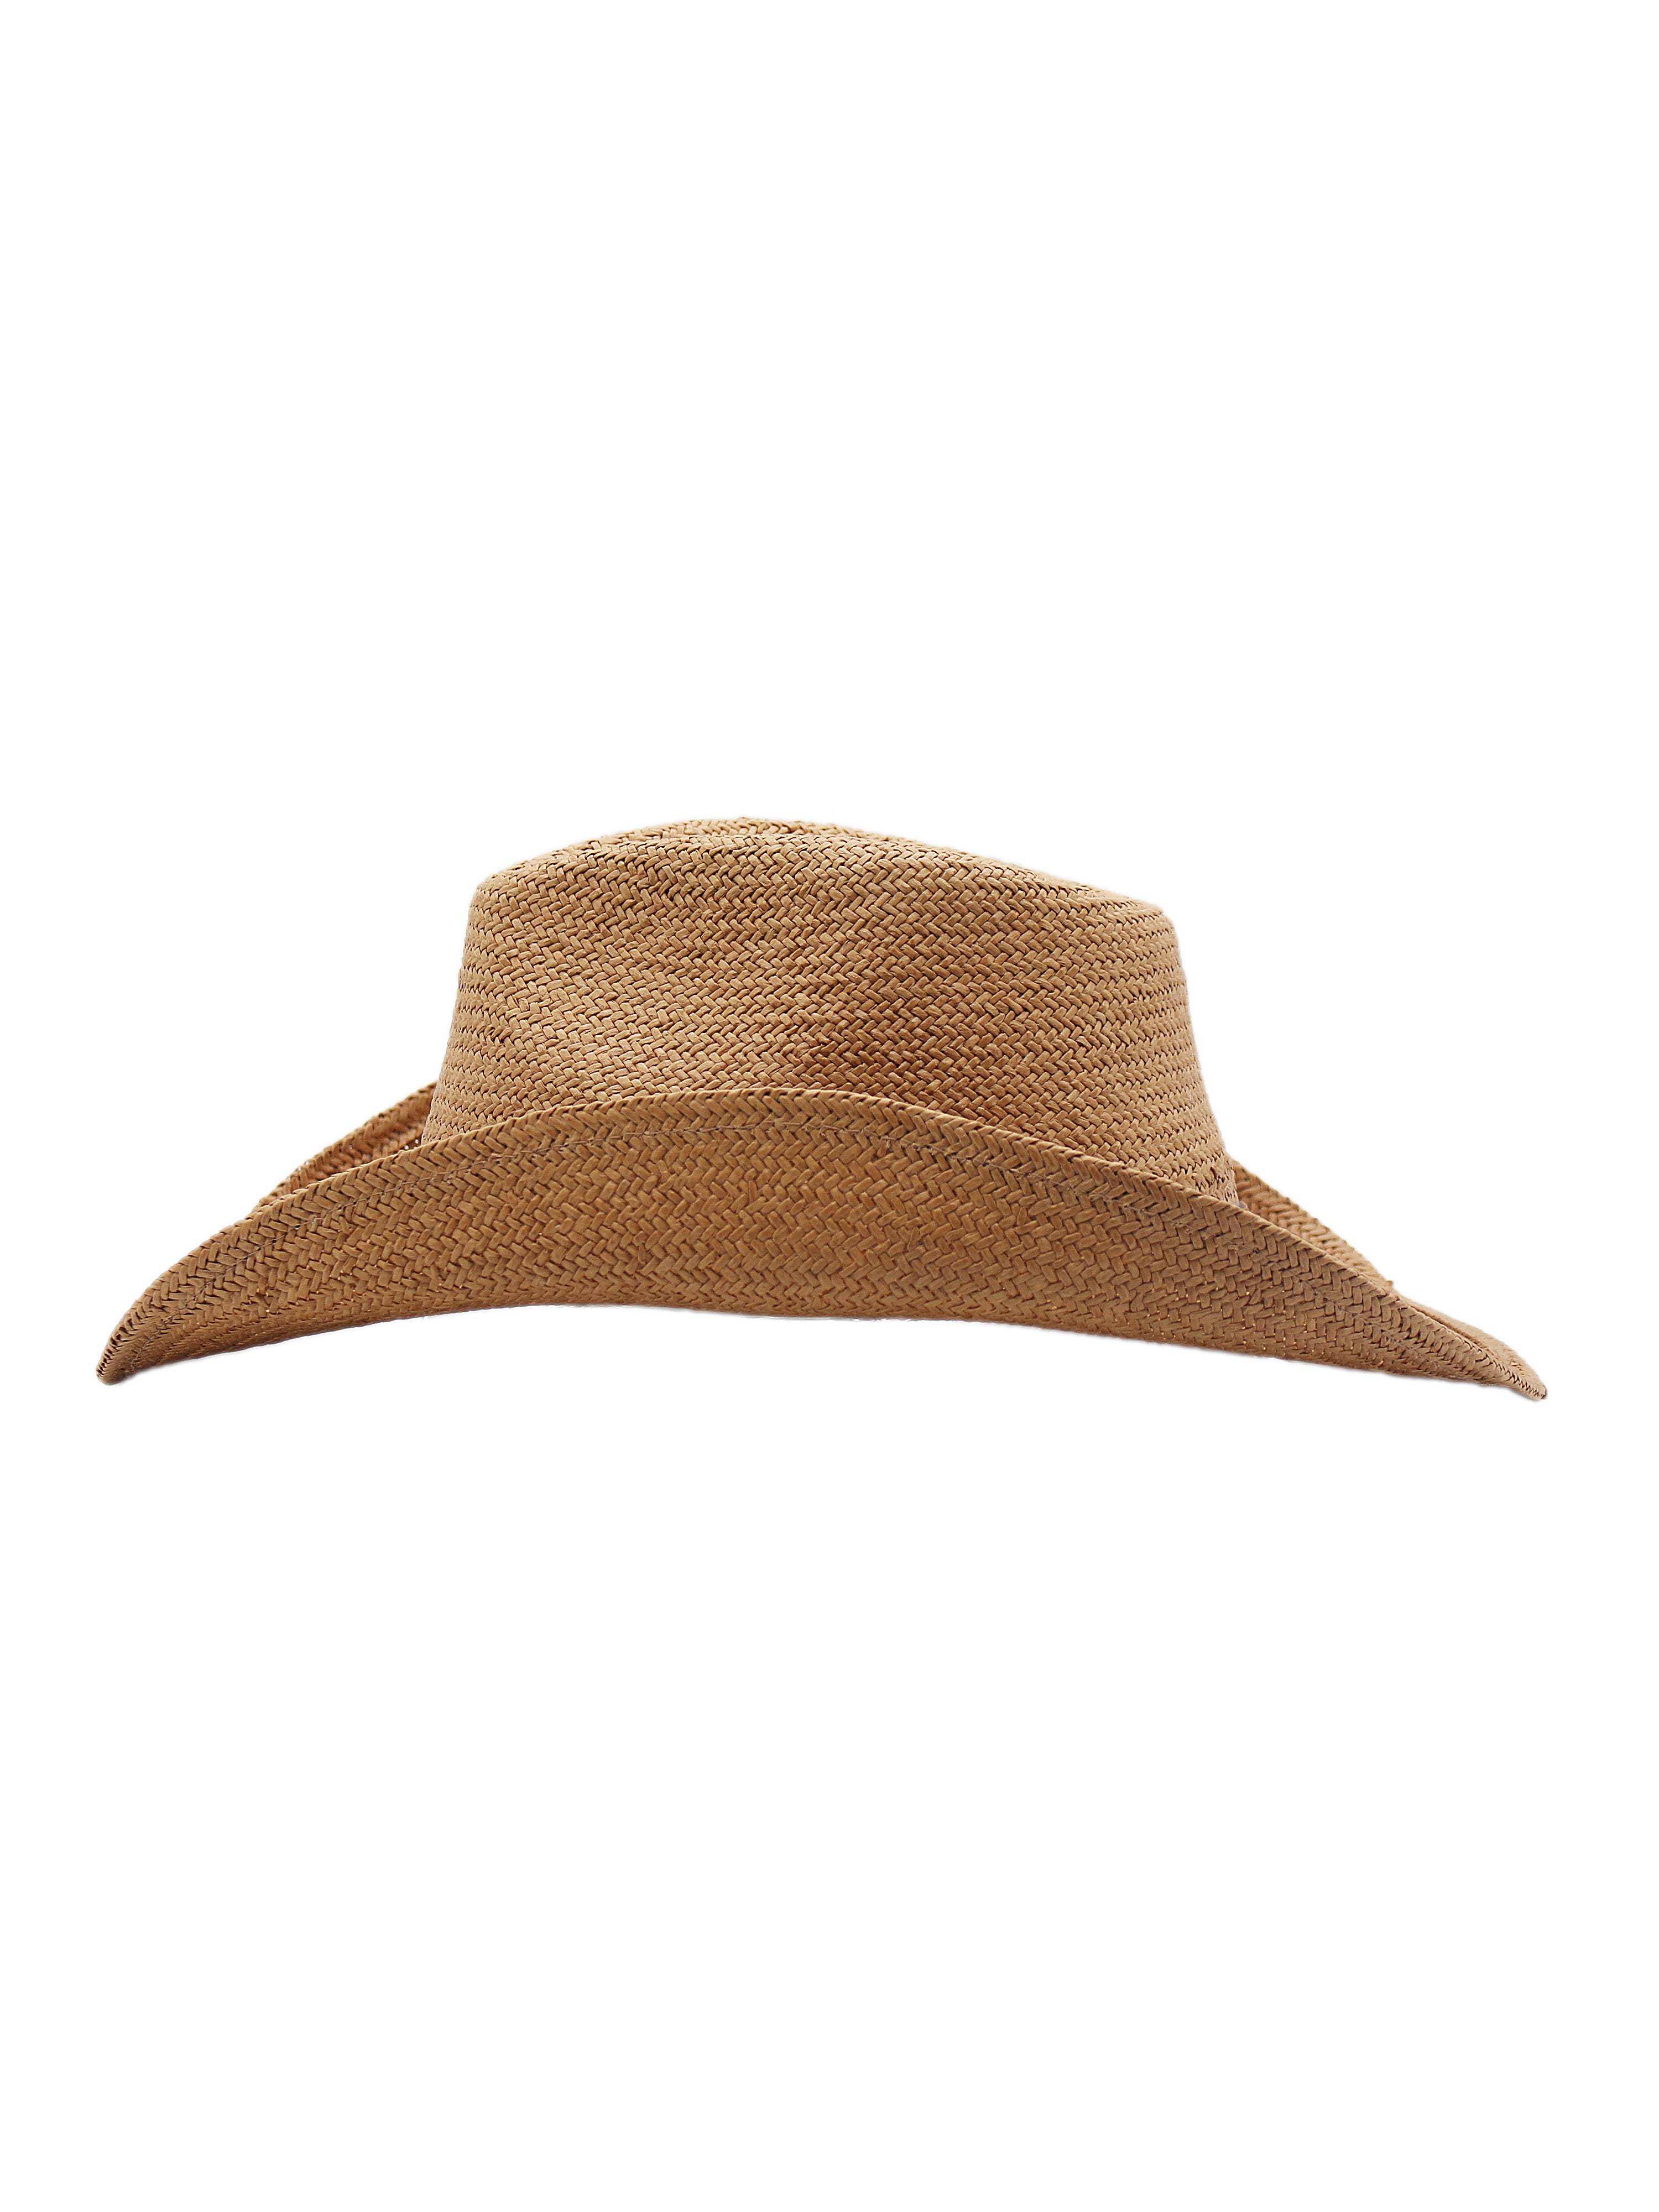 Silver Canyon Men&#39;s Phoenix Straw Shapeable Western Cowboy Sun Hat - Natural